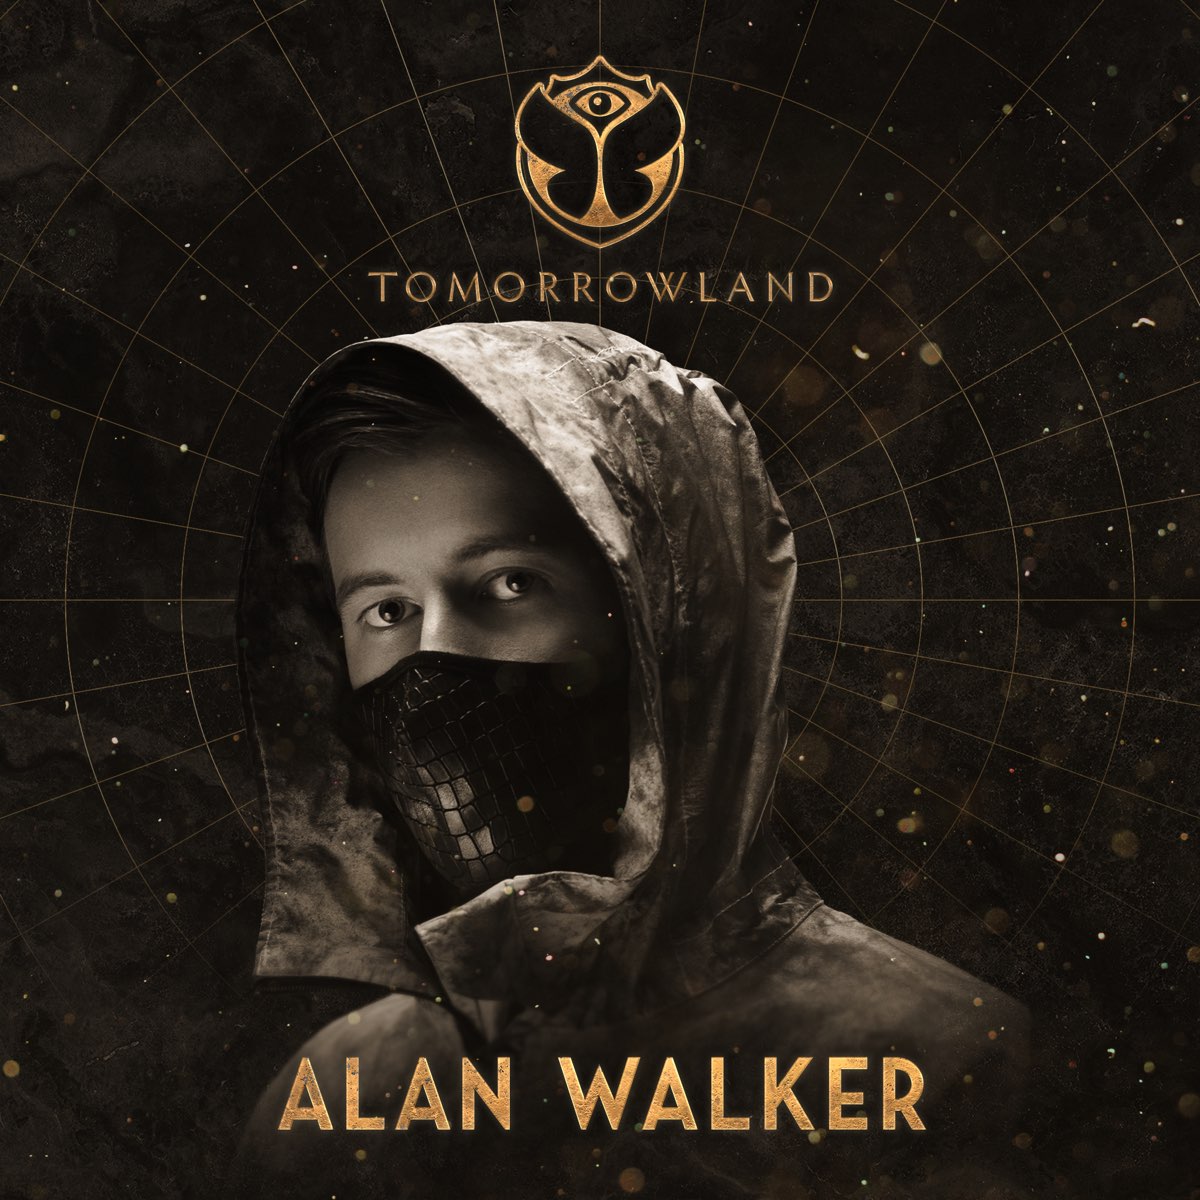 Tomorrowland 2022: Alan Walker at Mainstage, Weekend 2 (DJ Mix) by Alan  Walker on Apple Music